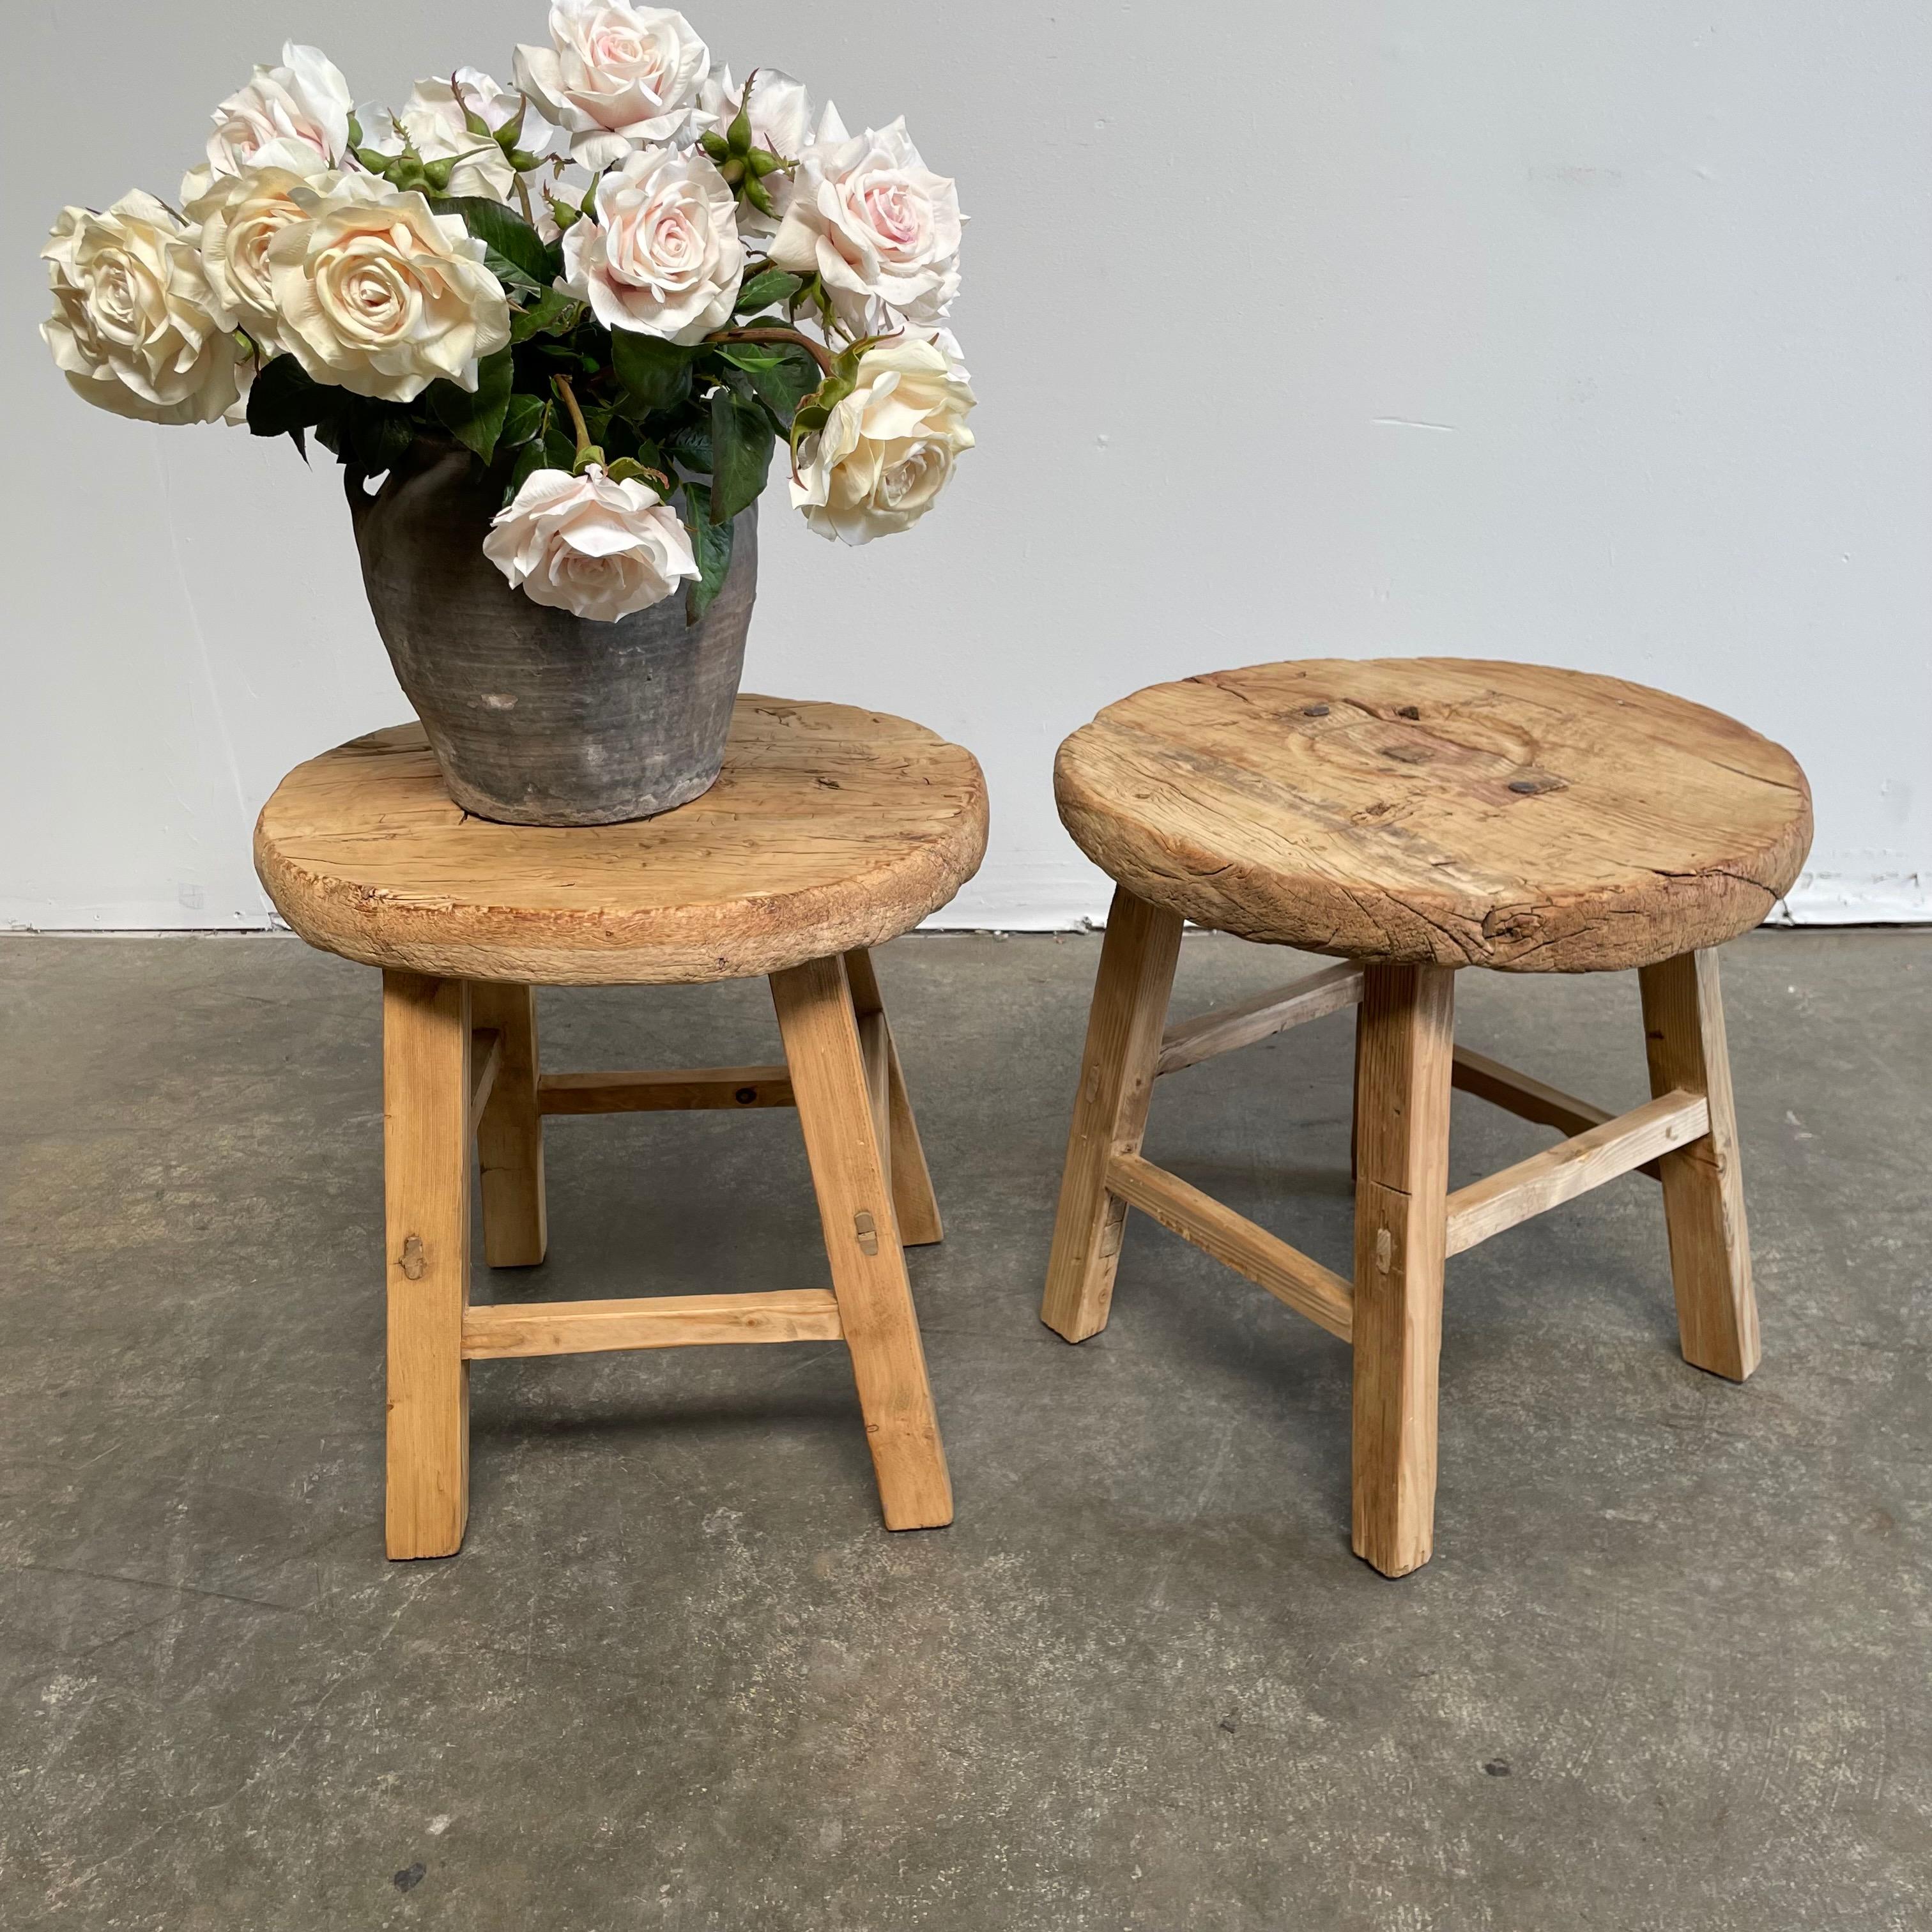 Vintage round elm wood side table 
Size:20